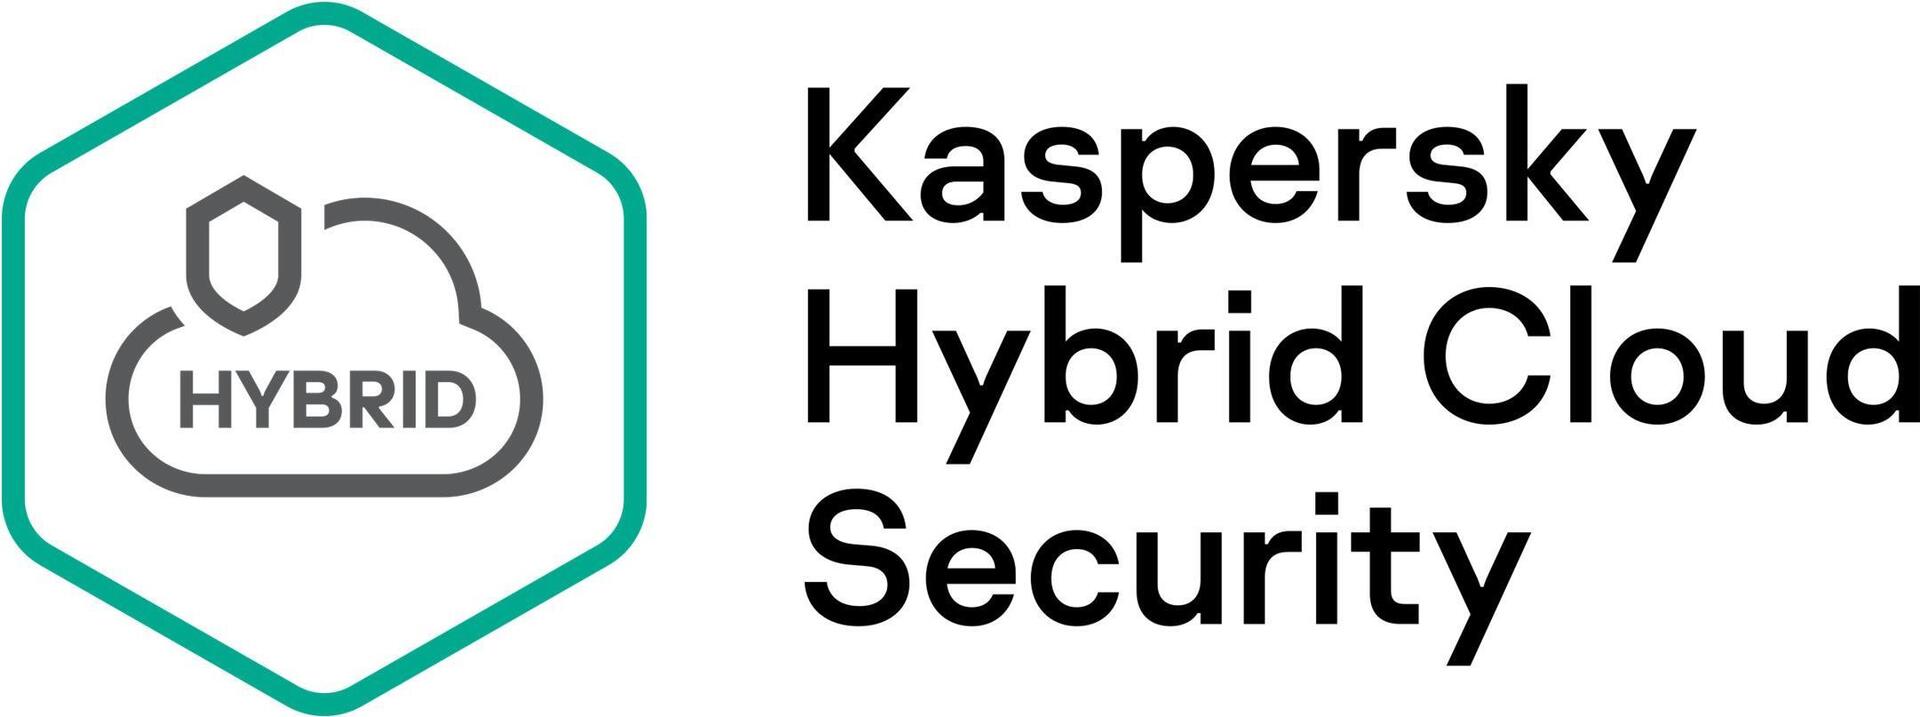 Kaspersky Hybrid Cloud Security Enterprise CPU European Edi. 10-14 CPU 3-Year Renewal License (KL4553XAKTR)